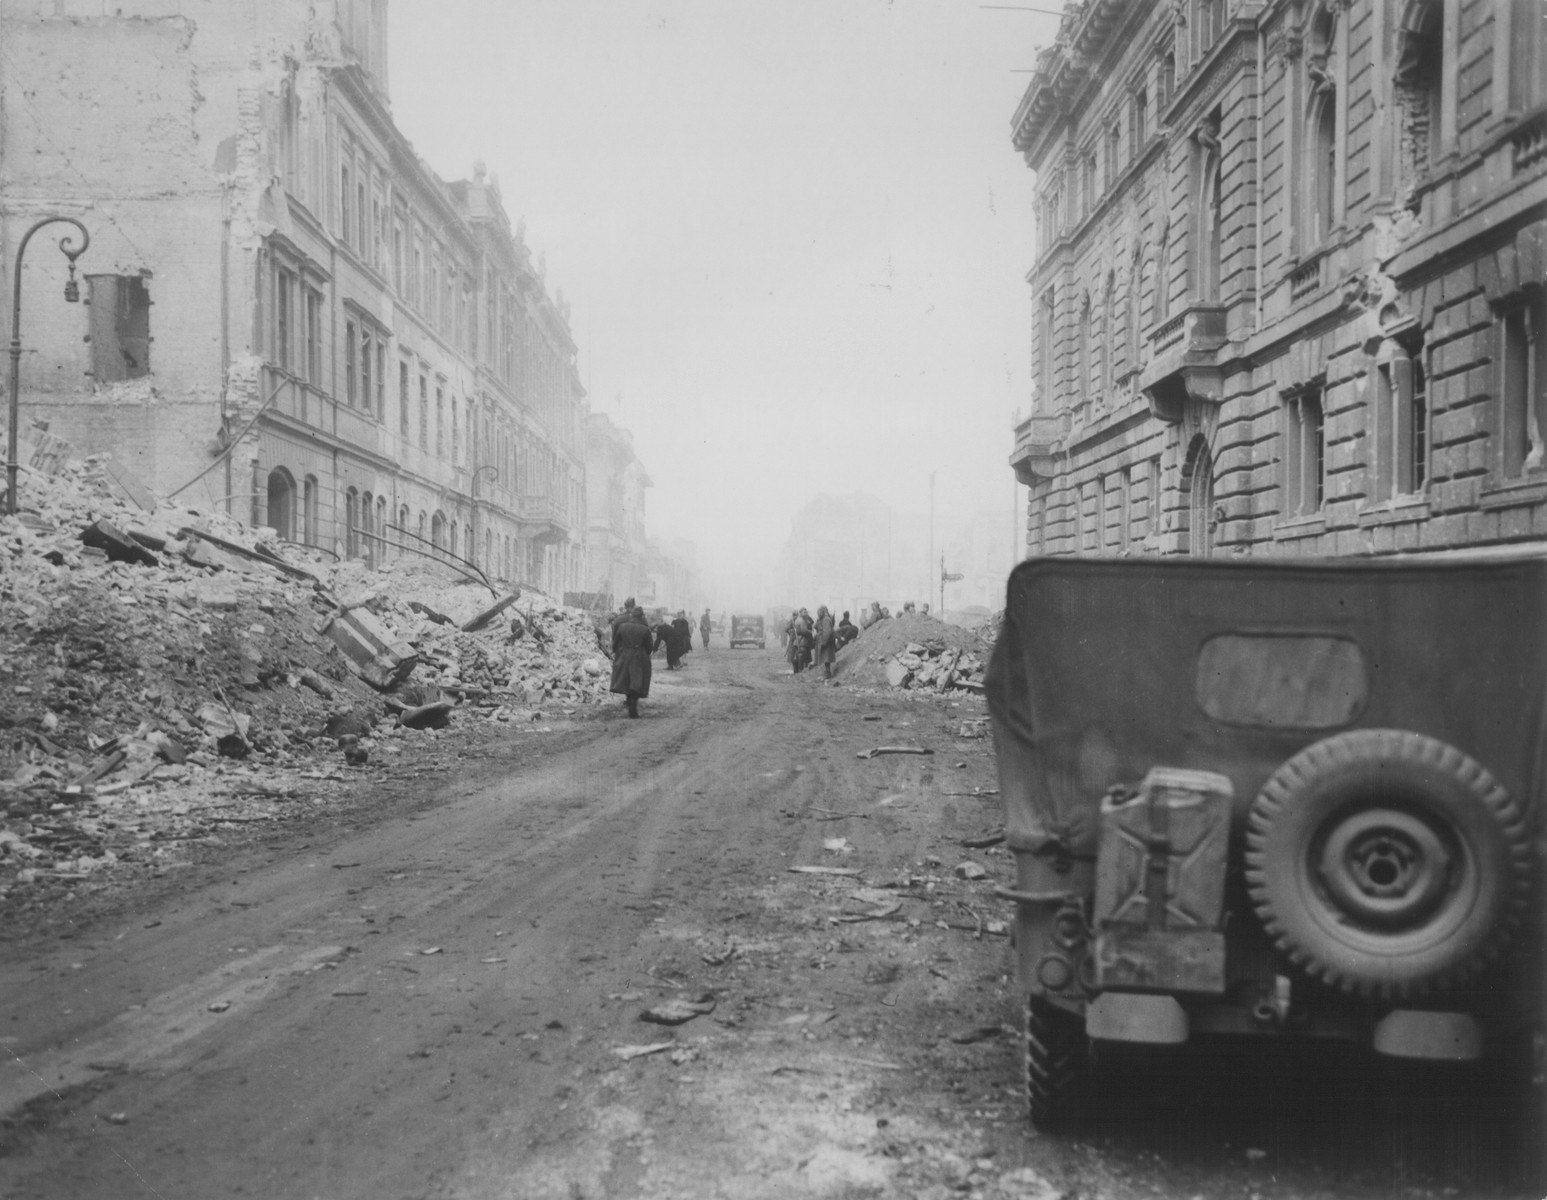 Allied troops walk along a rubble-strewn street in a German city at the end of World War II.